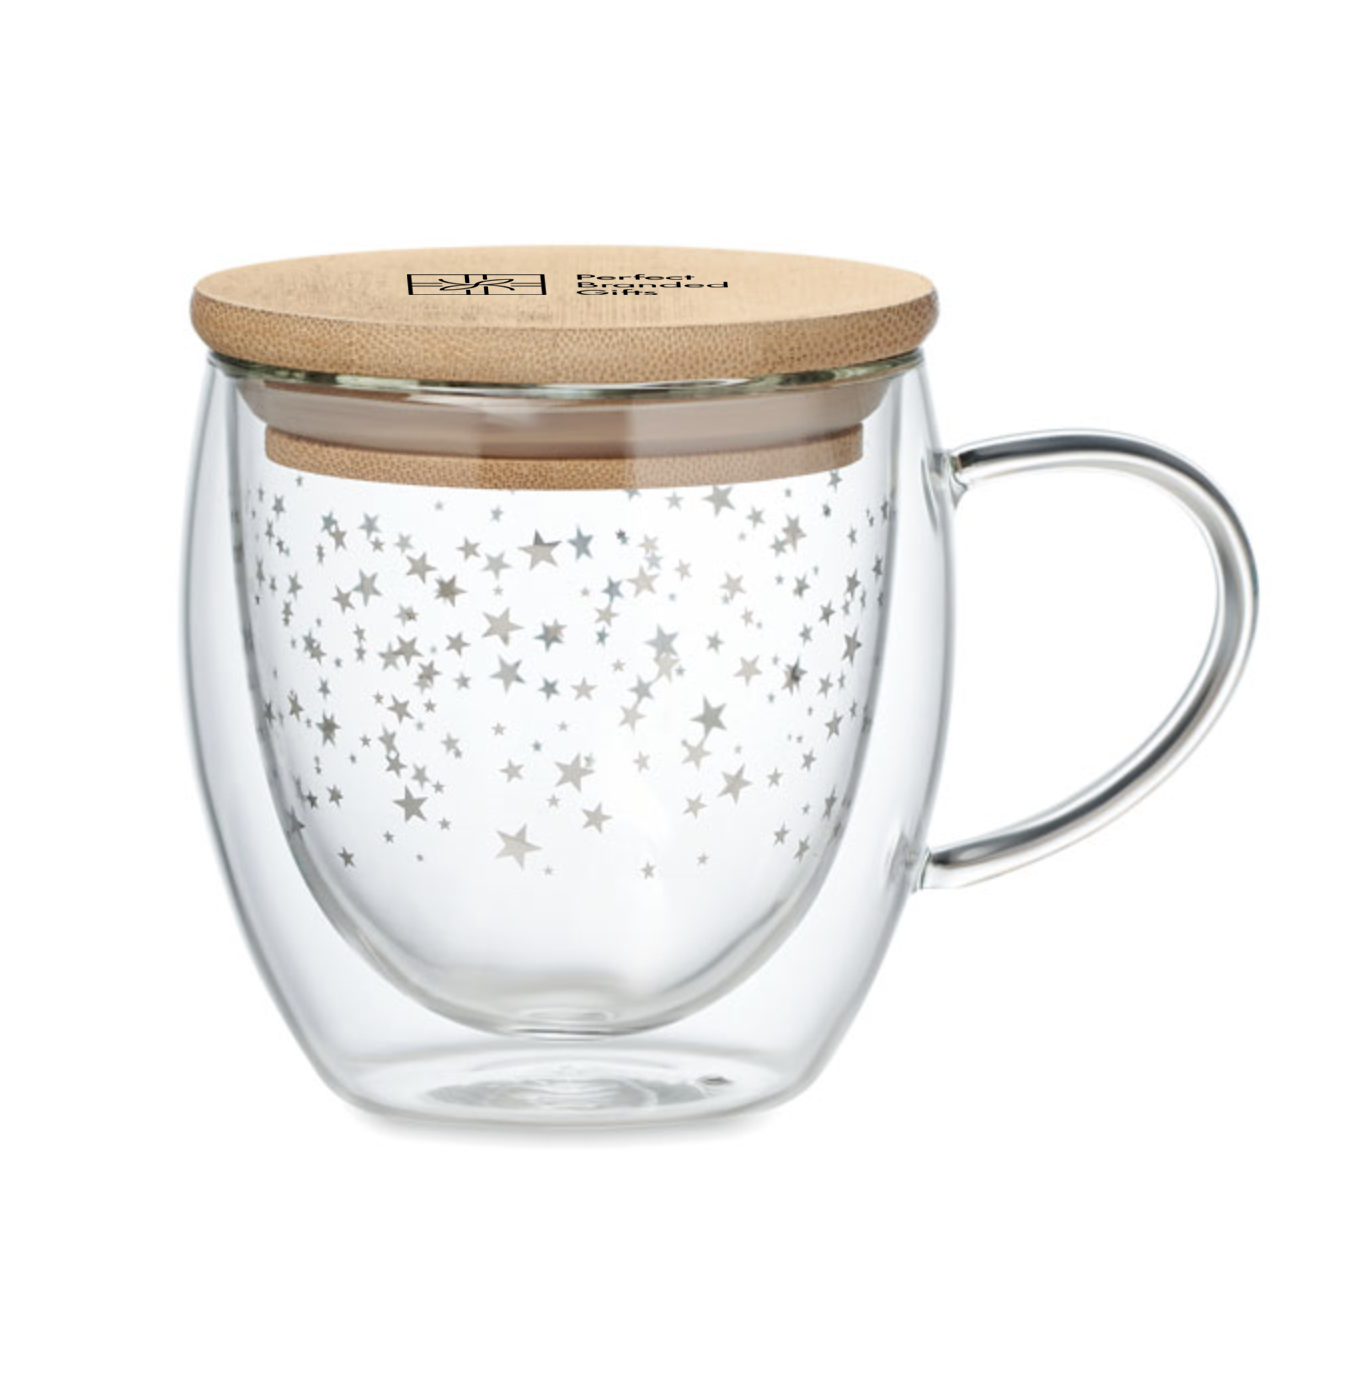 Double wall borosilicate mug with stars design